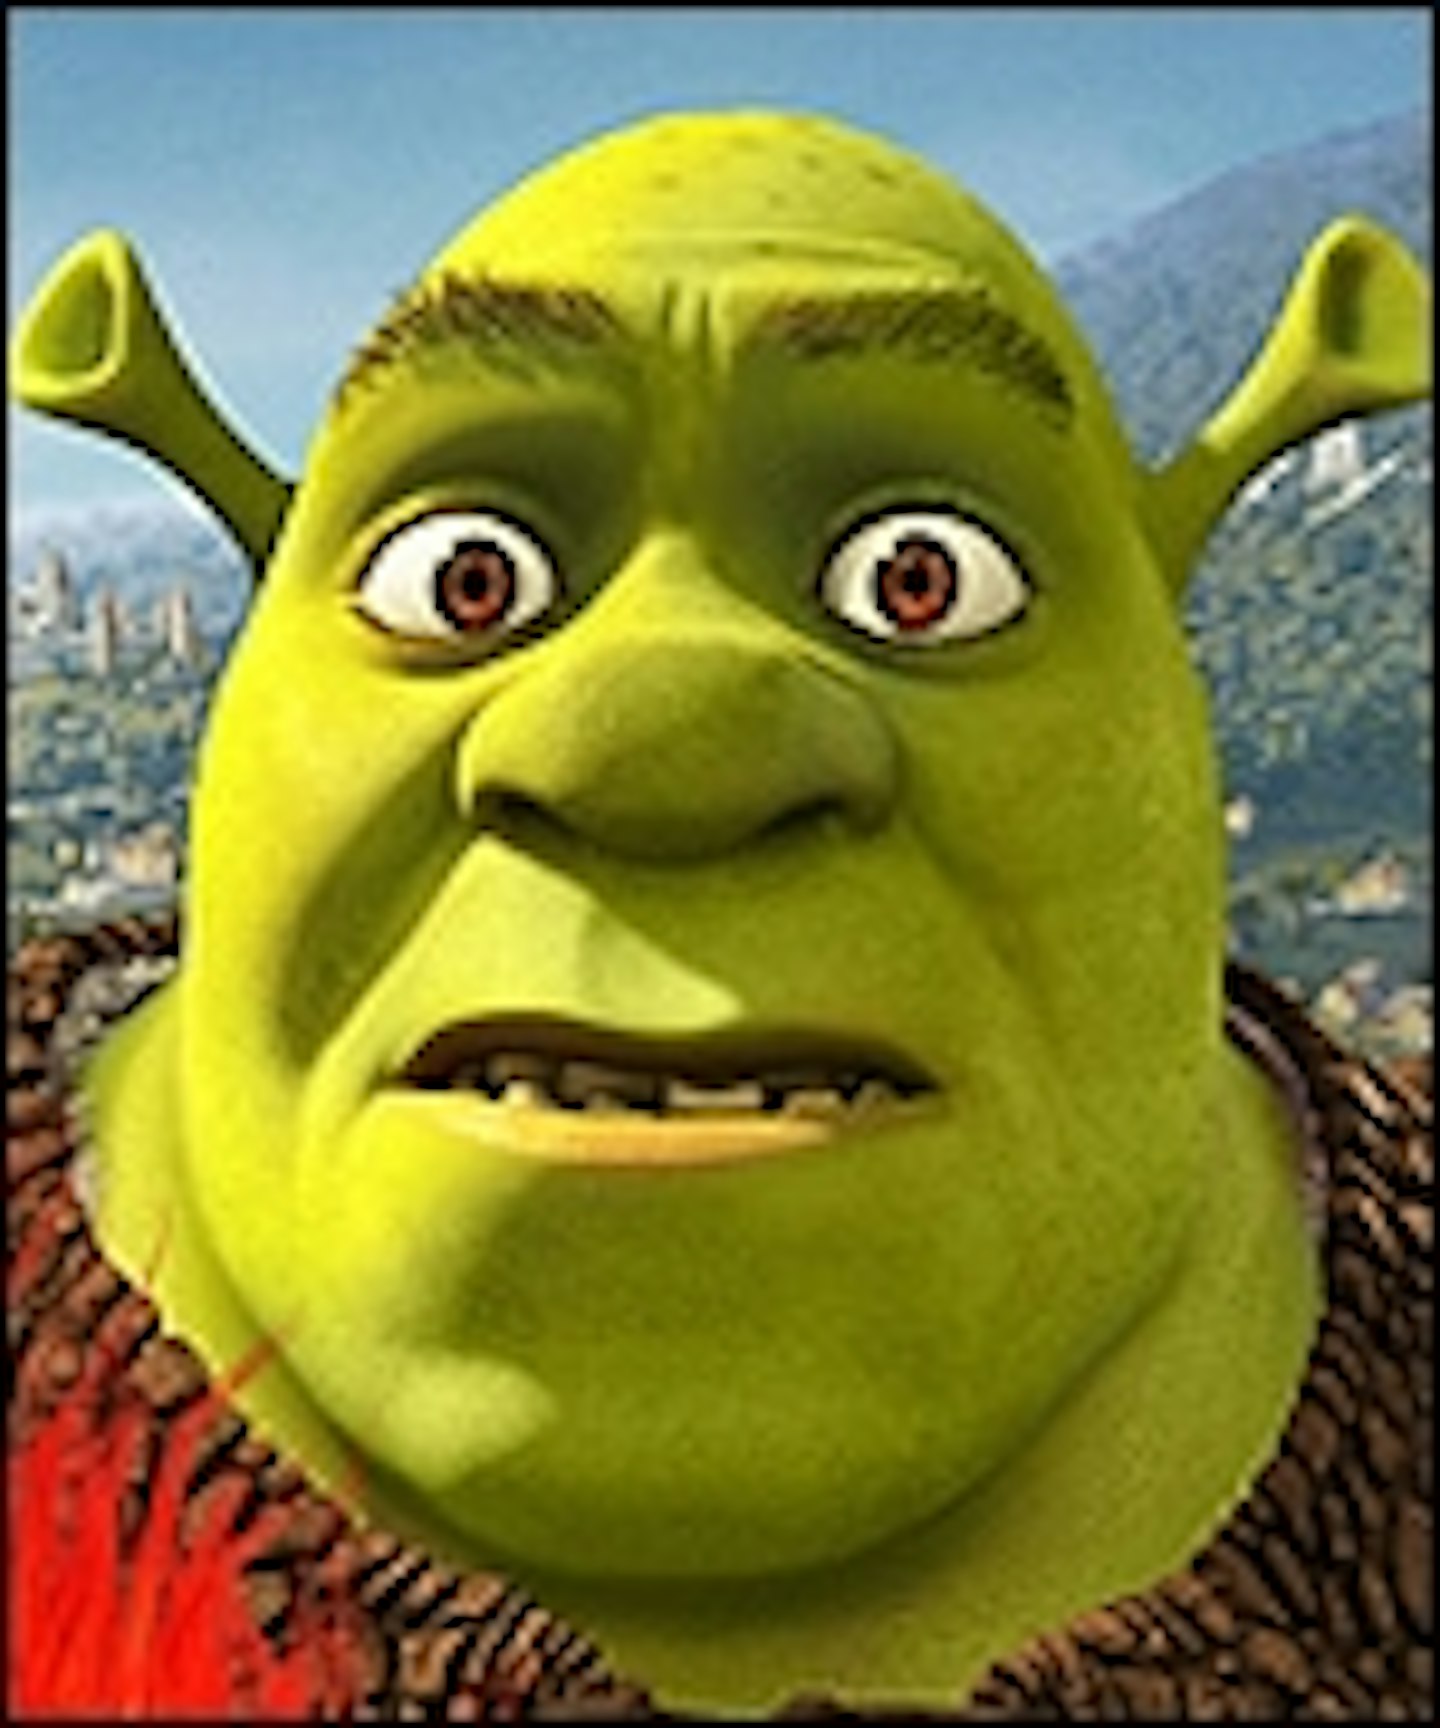 New Shrek The Final Chapter Poster